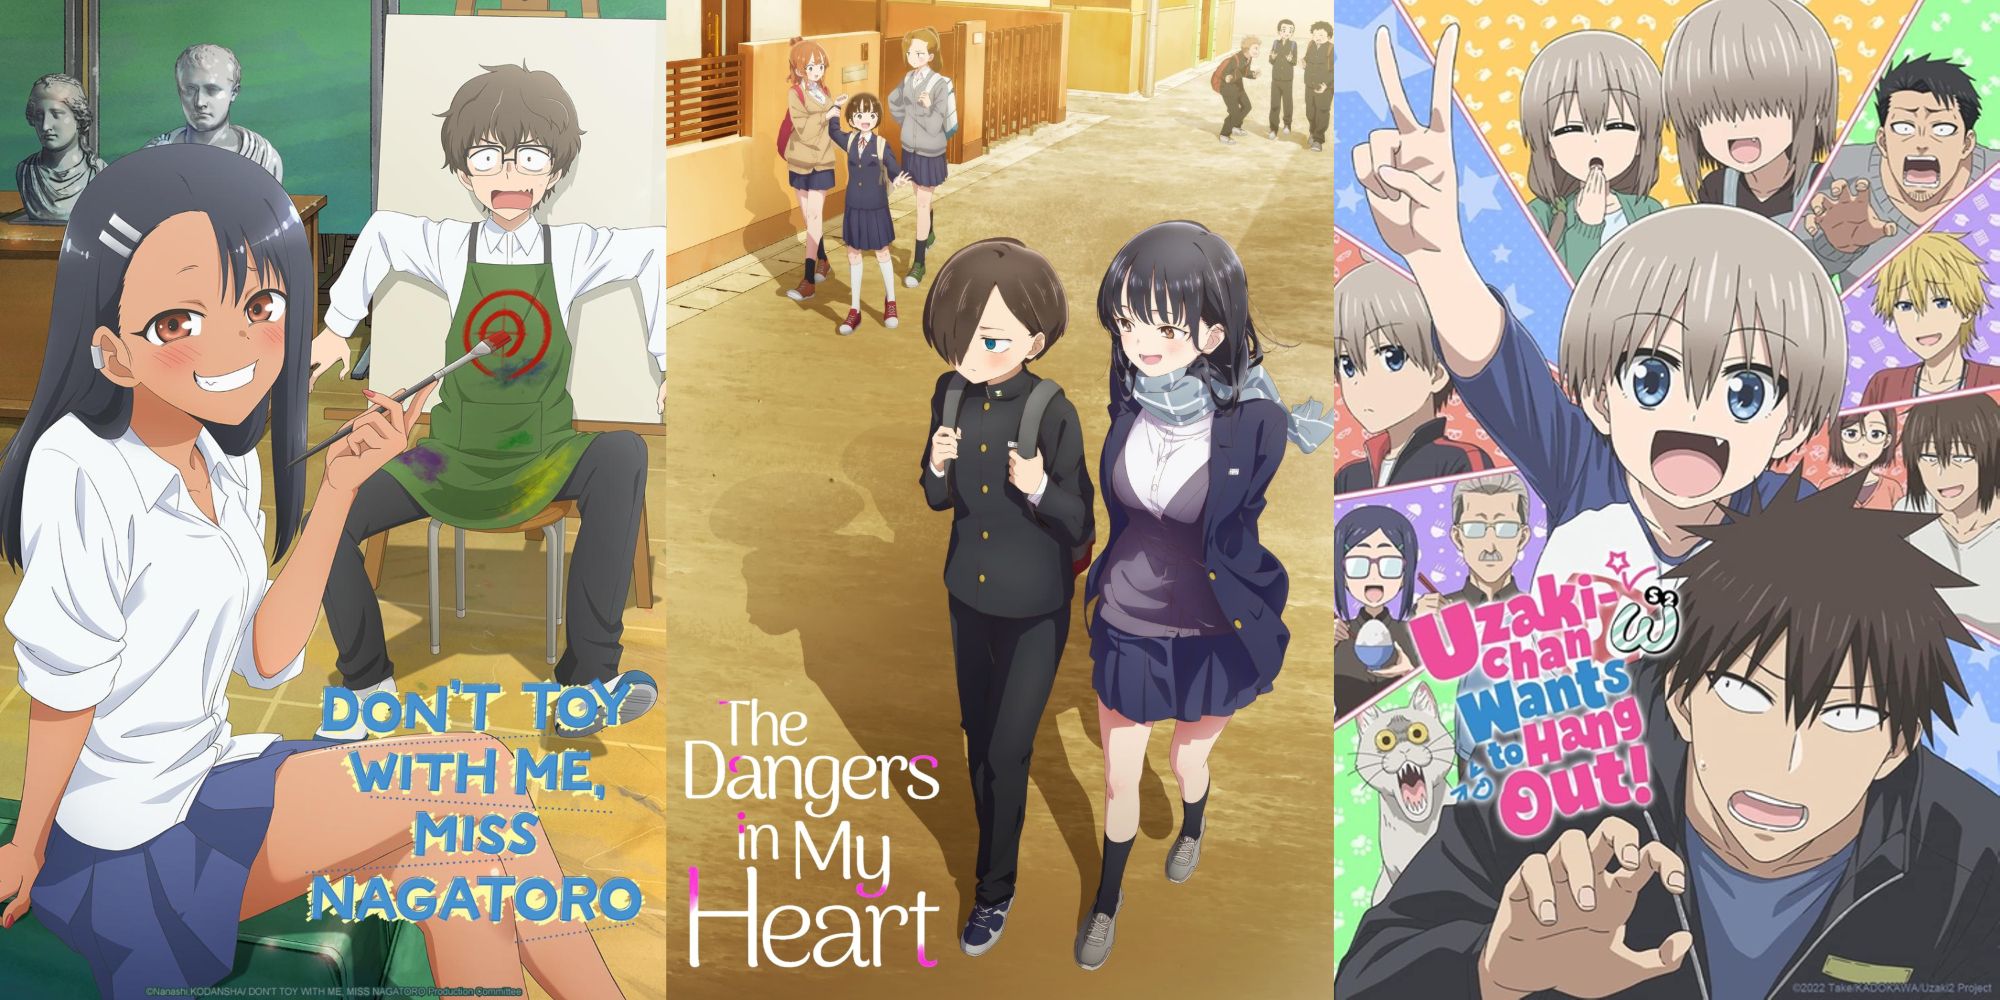 Funimation - “I love danger.” [via Fire Force]